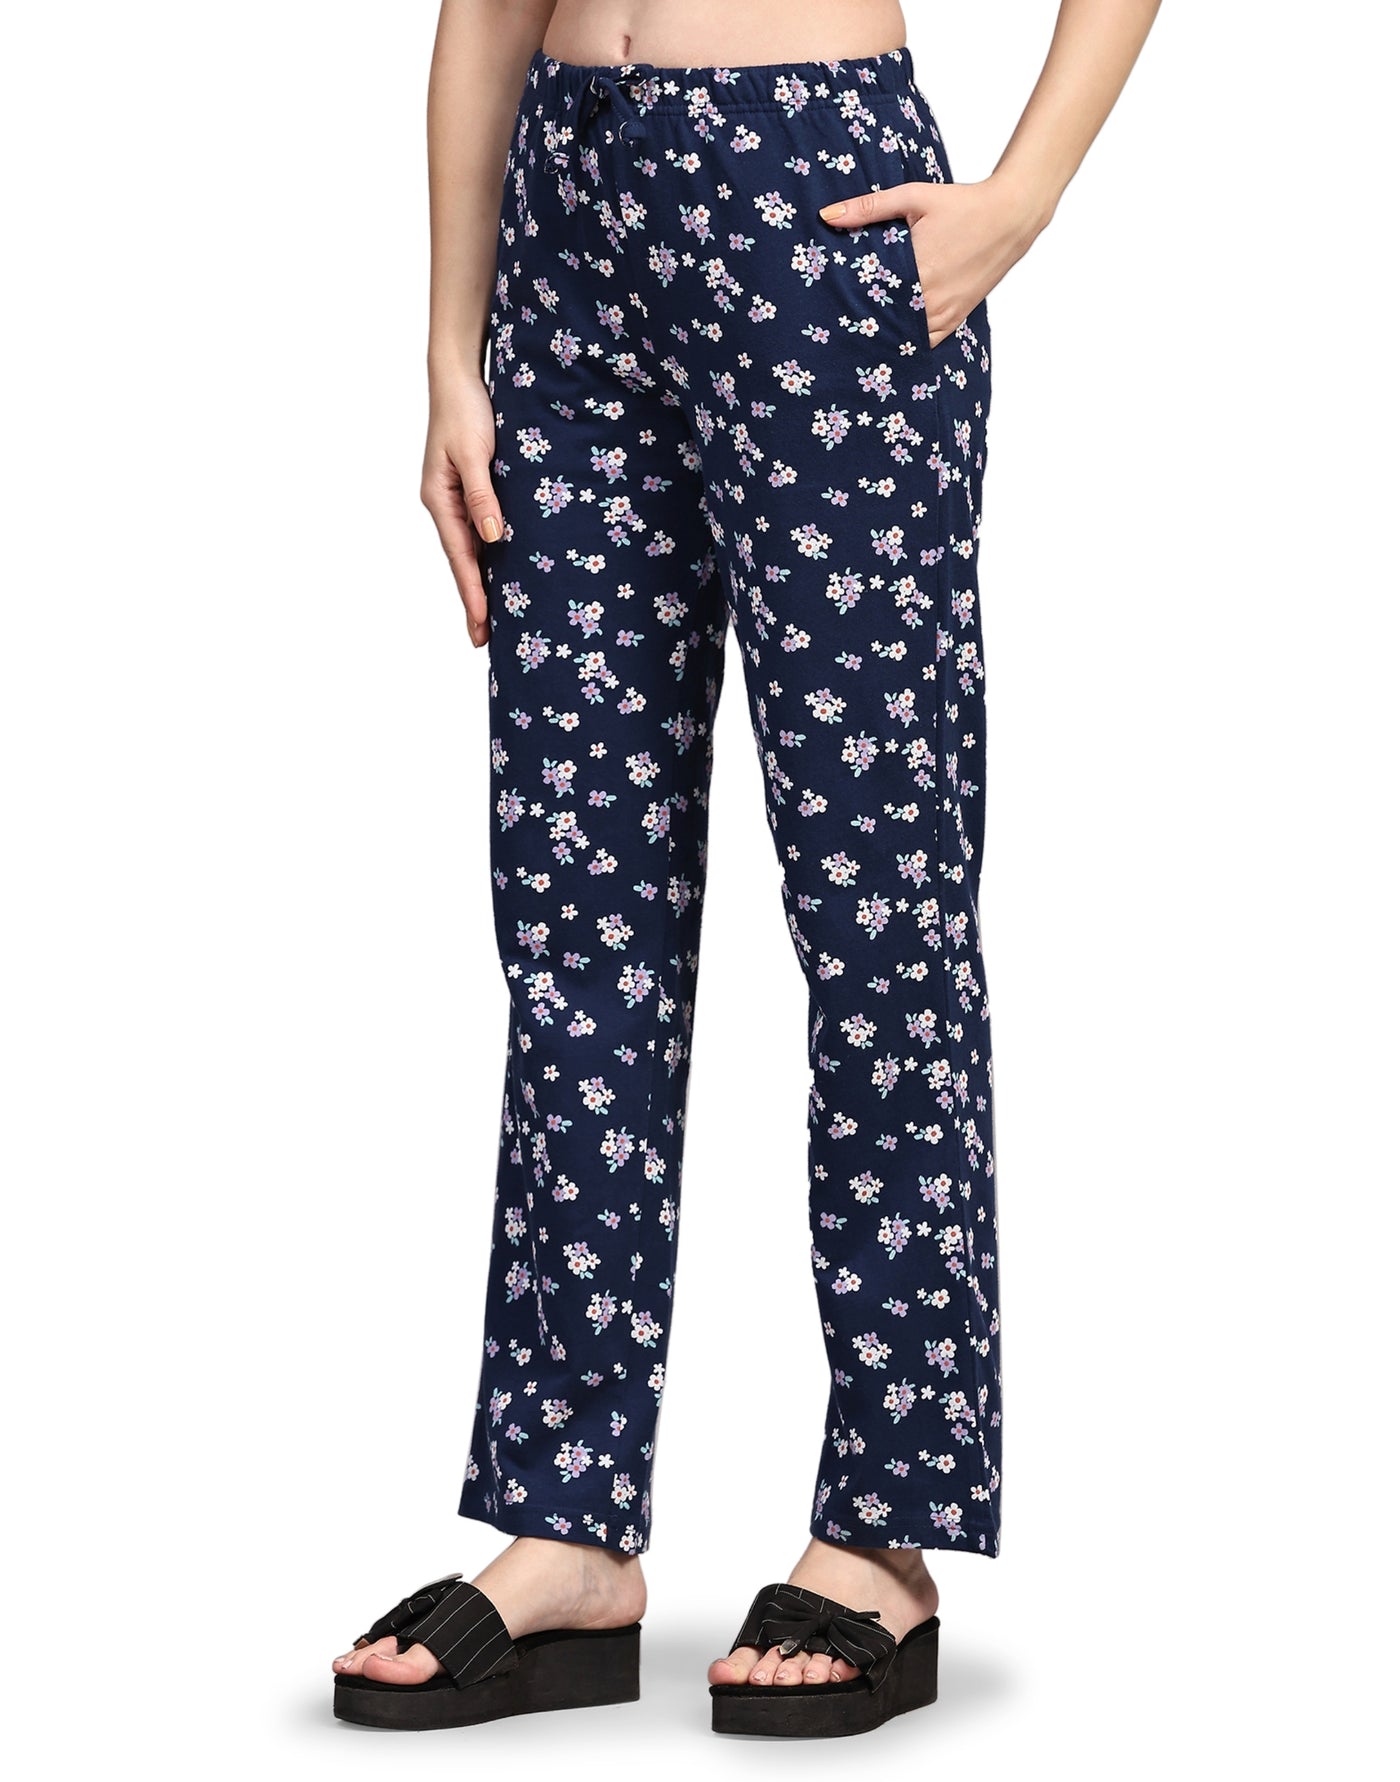 Pyjama Set for Women-Blue Floral Print